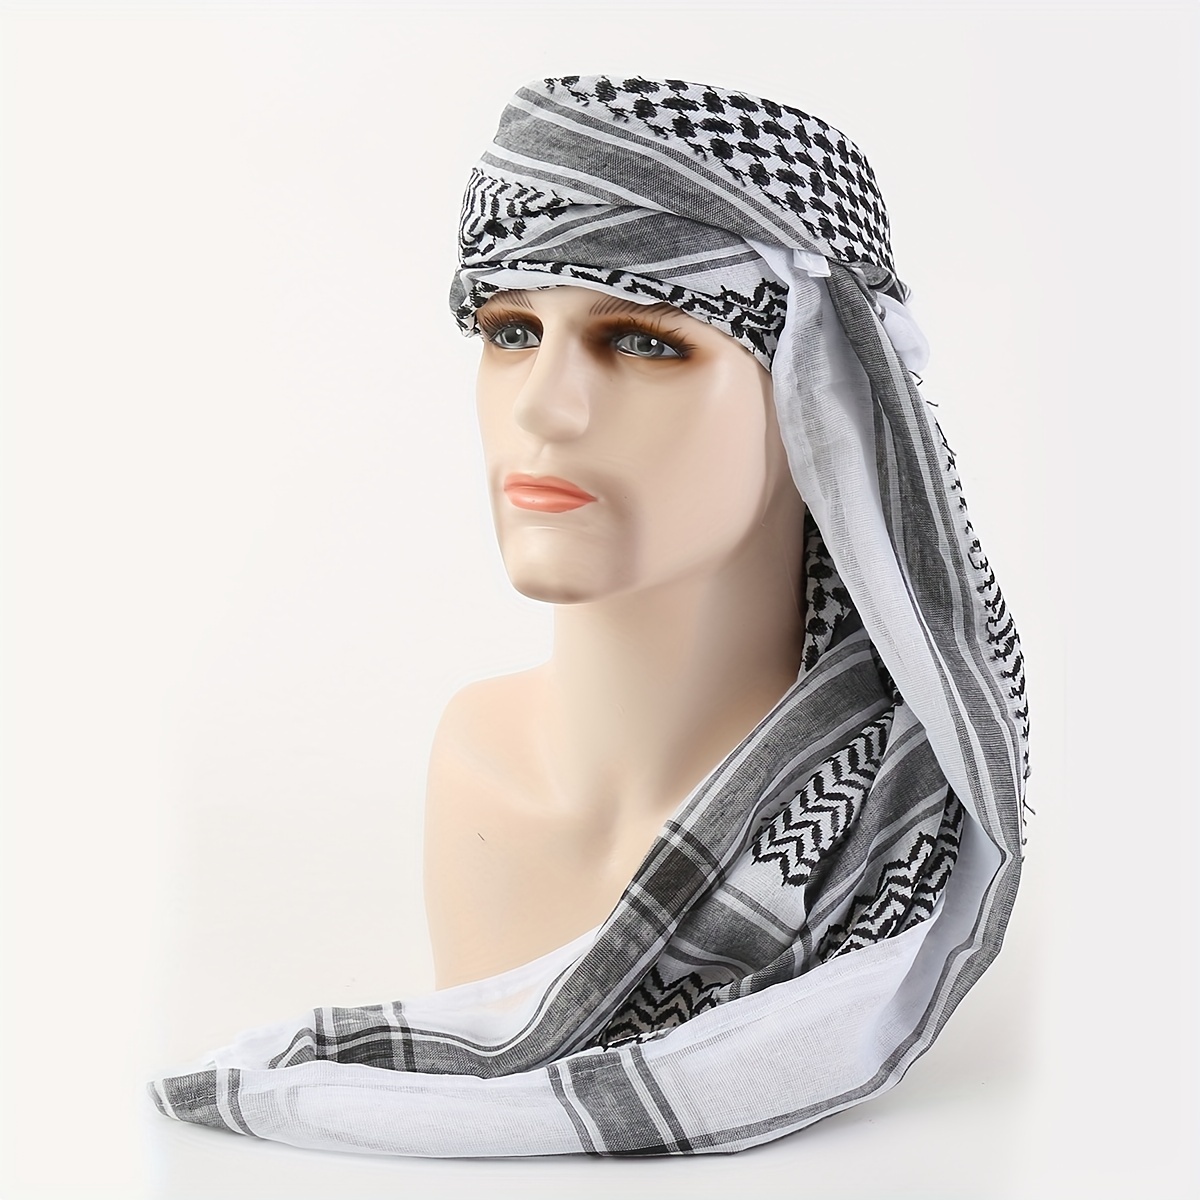 Mens Large Arab Shemagh Headscarf Muslim Headcover Shawl Desert